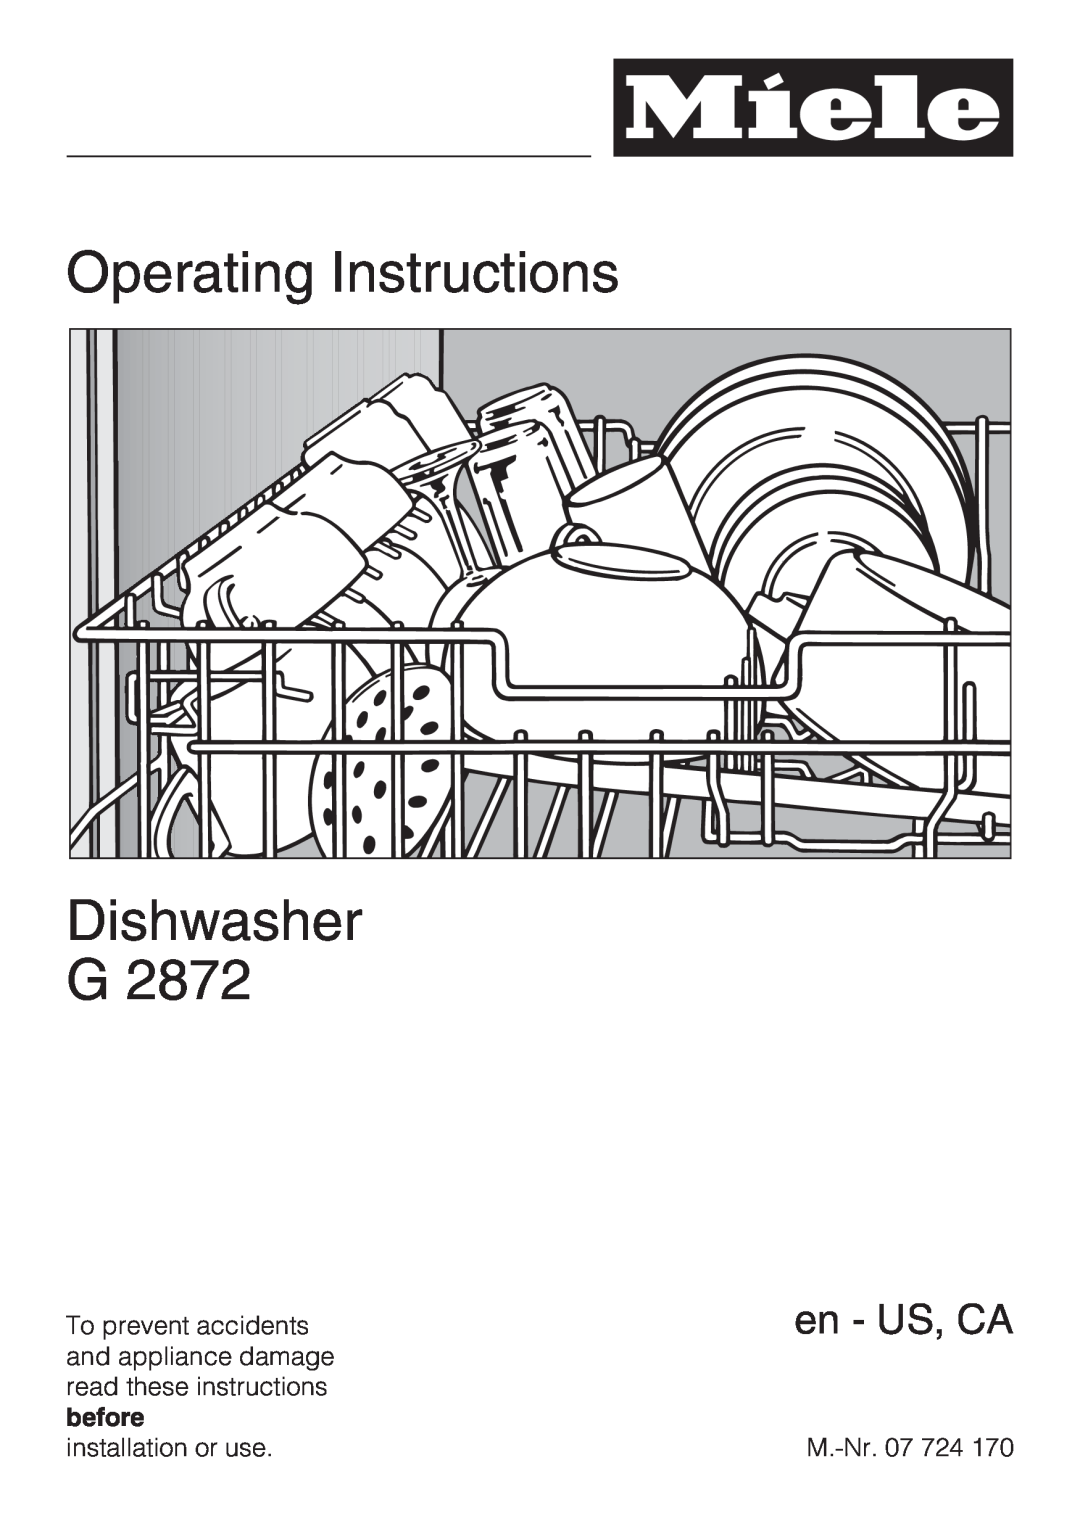 Miele G 2872 operating instructions Operating Instructions, Dishwasher, en - US, CA 